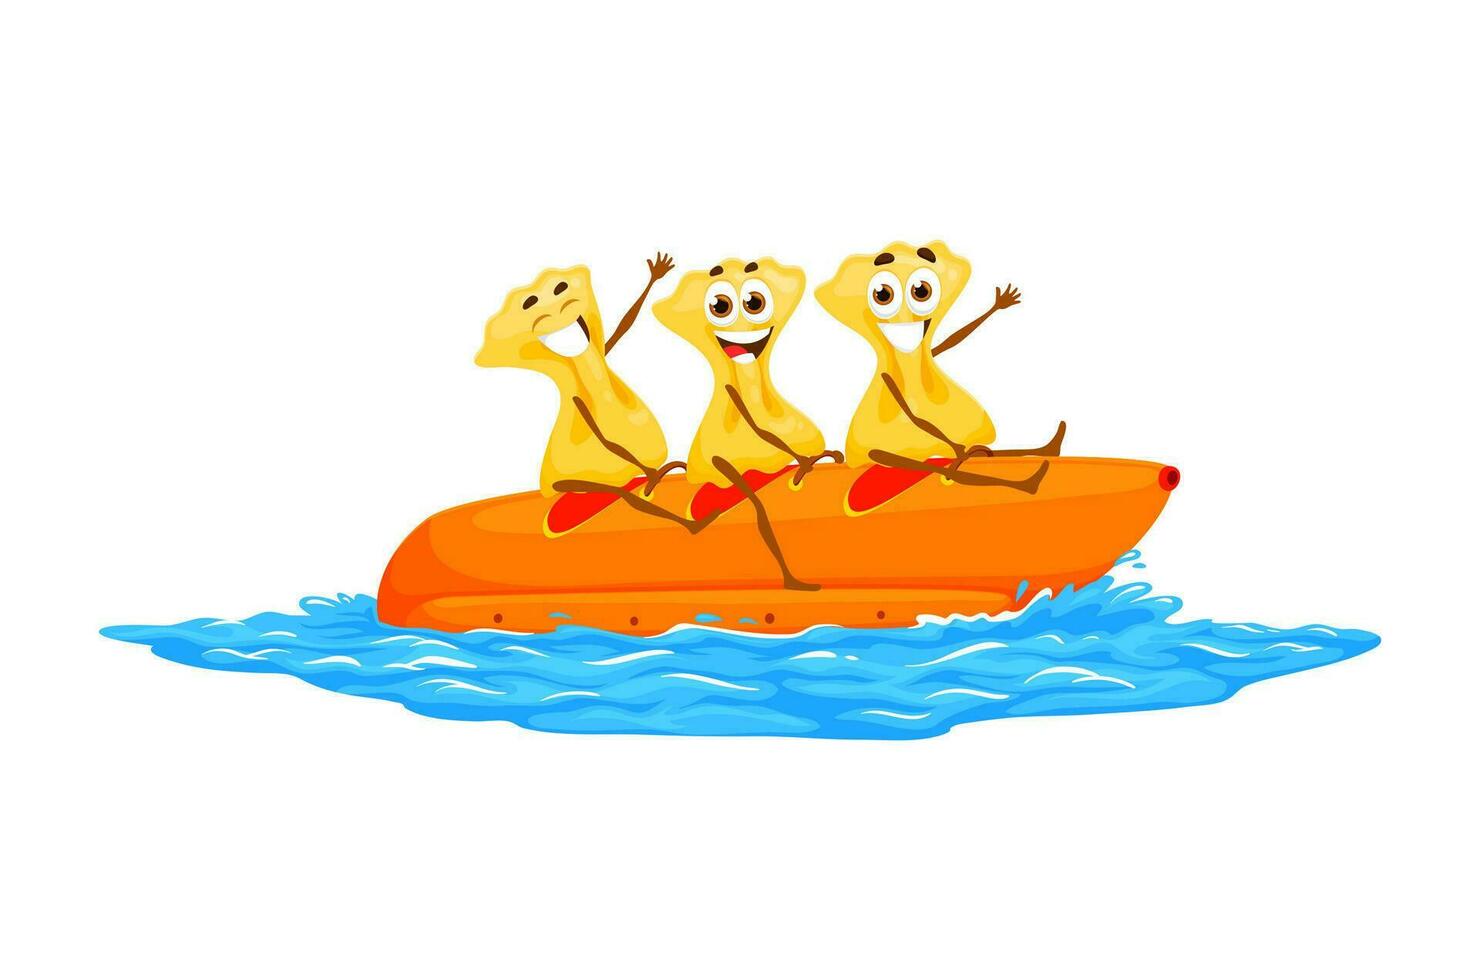 Cartoon farfalle pasta characters ride banana boat vector